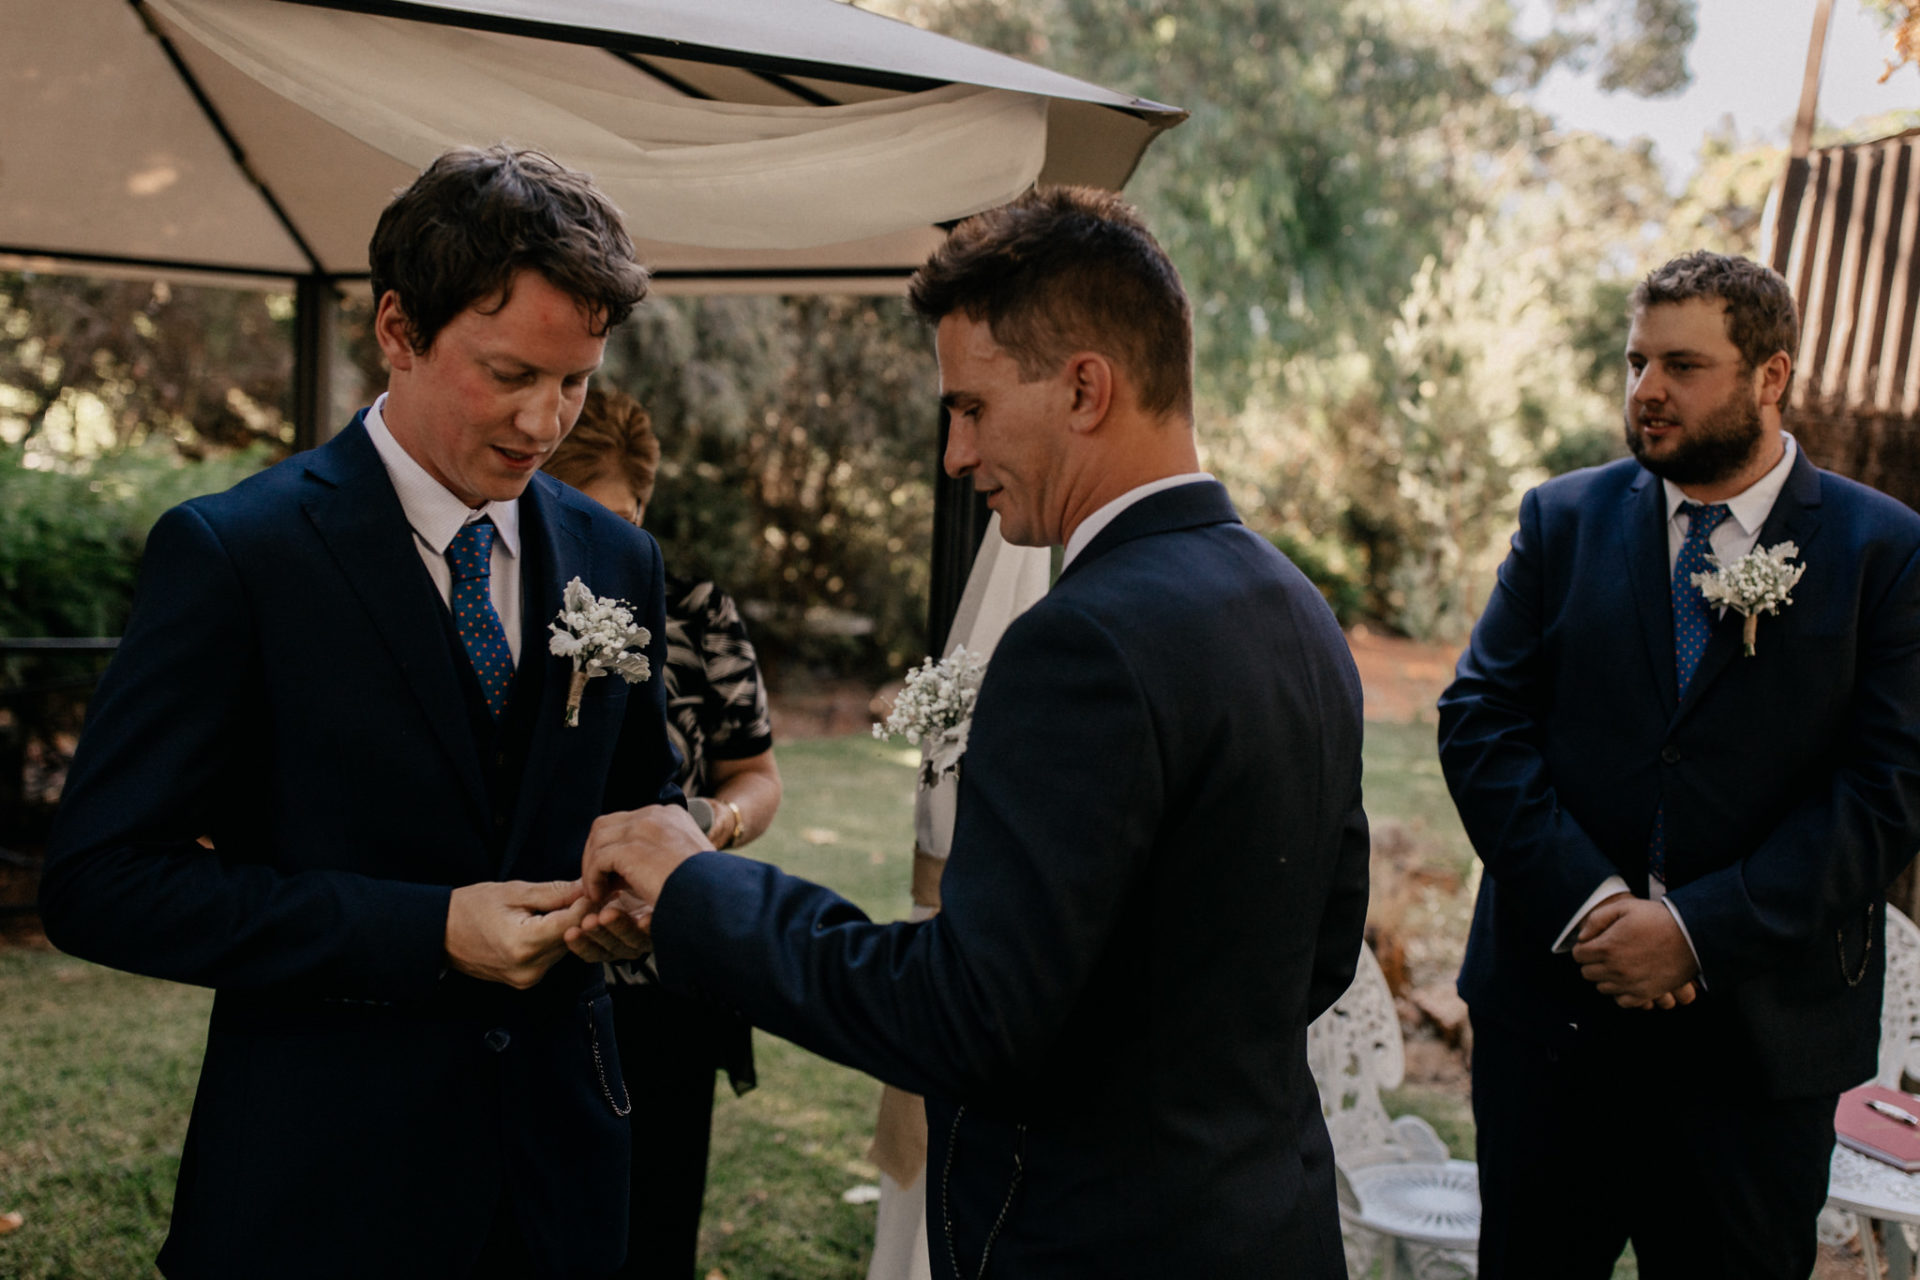 backyard-wedding-australia-melbourne-ceremony-best-man-ring-exchange